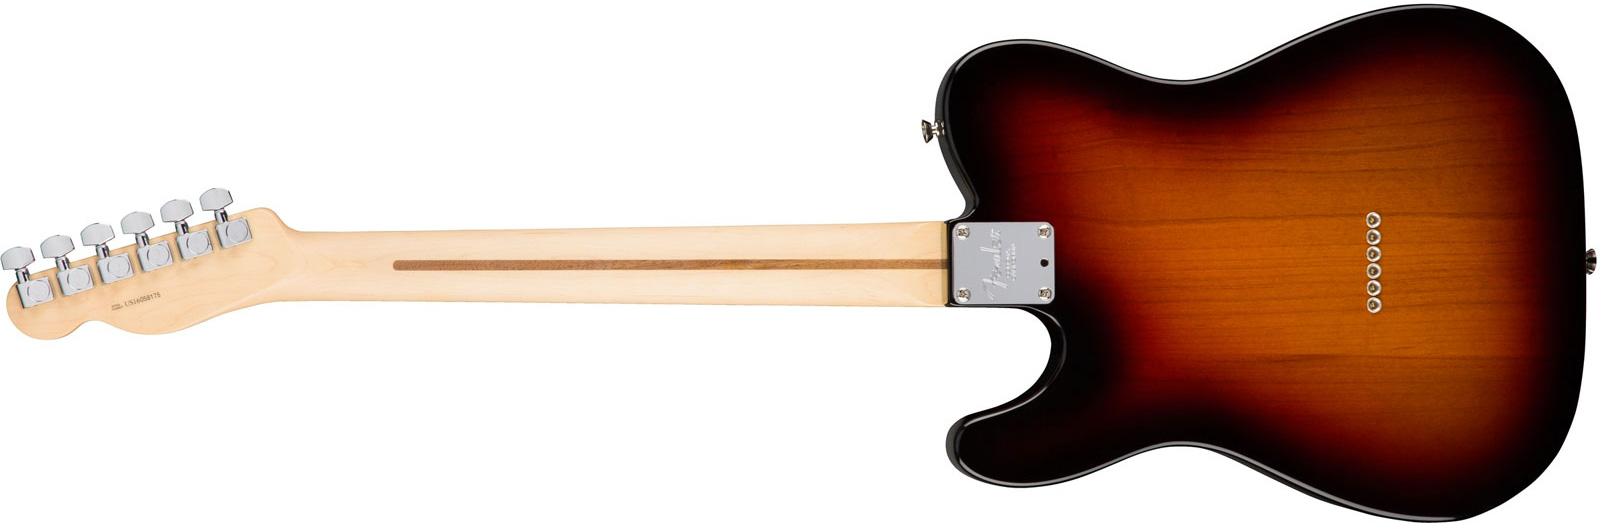 Fender Tele American Professional 2s Usa Mn - 3-color Sunburst - Guitarra eléctrica con forma de tel - Variation 2